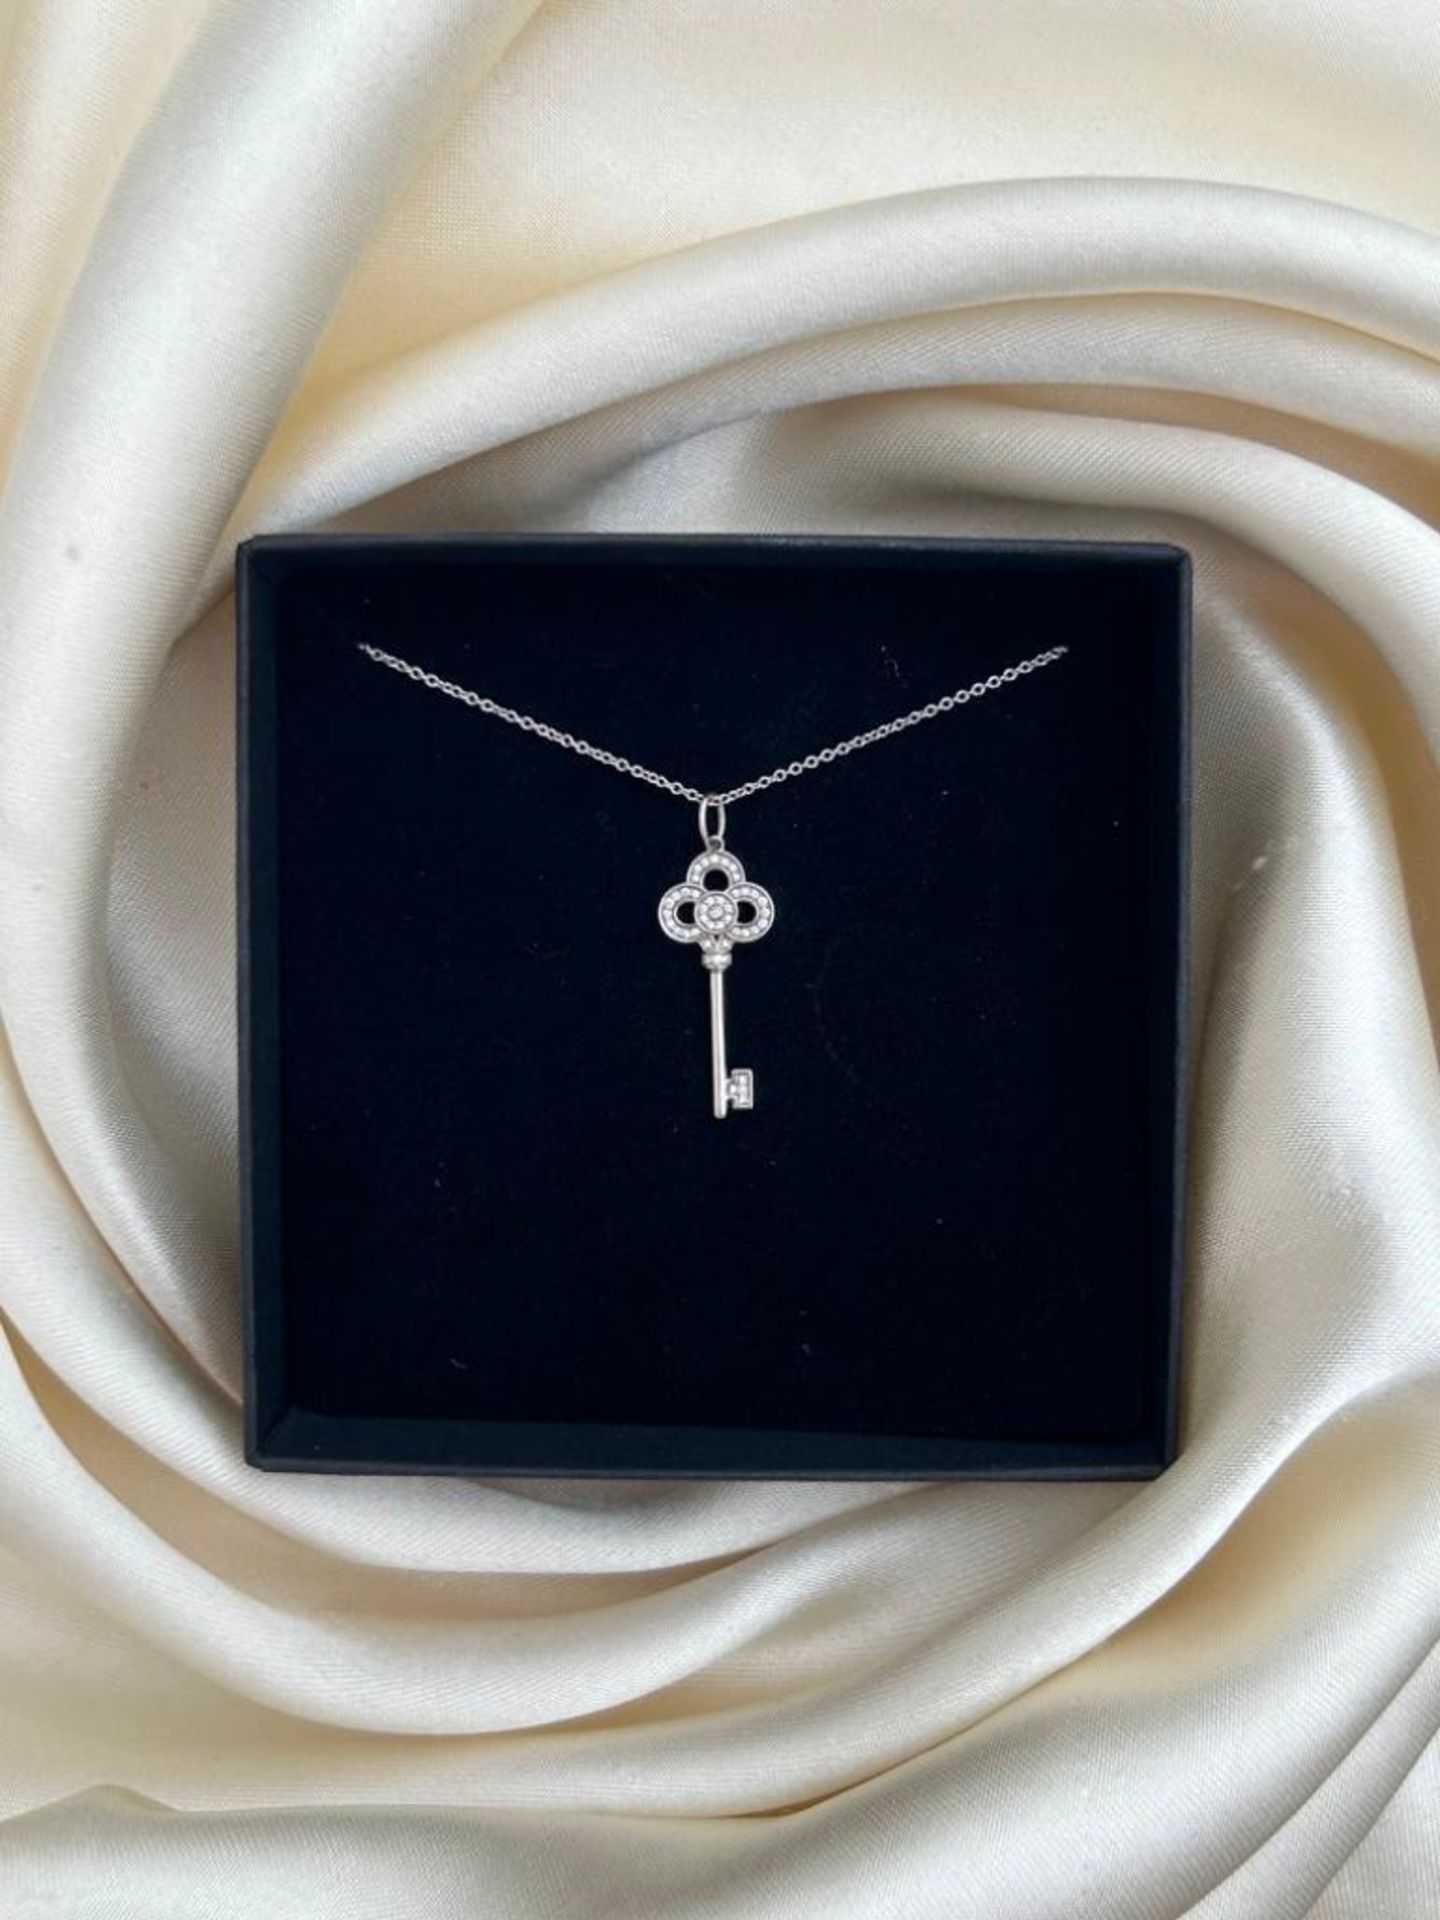 Amazing Tiffany 18ct White Gold Diamond Key Pendant on Tiffany Chain - Image 6 of 7